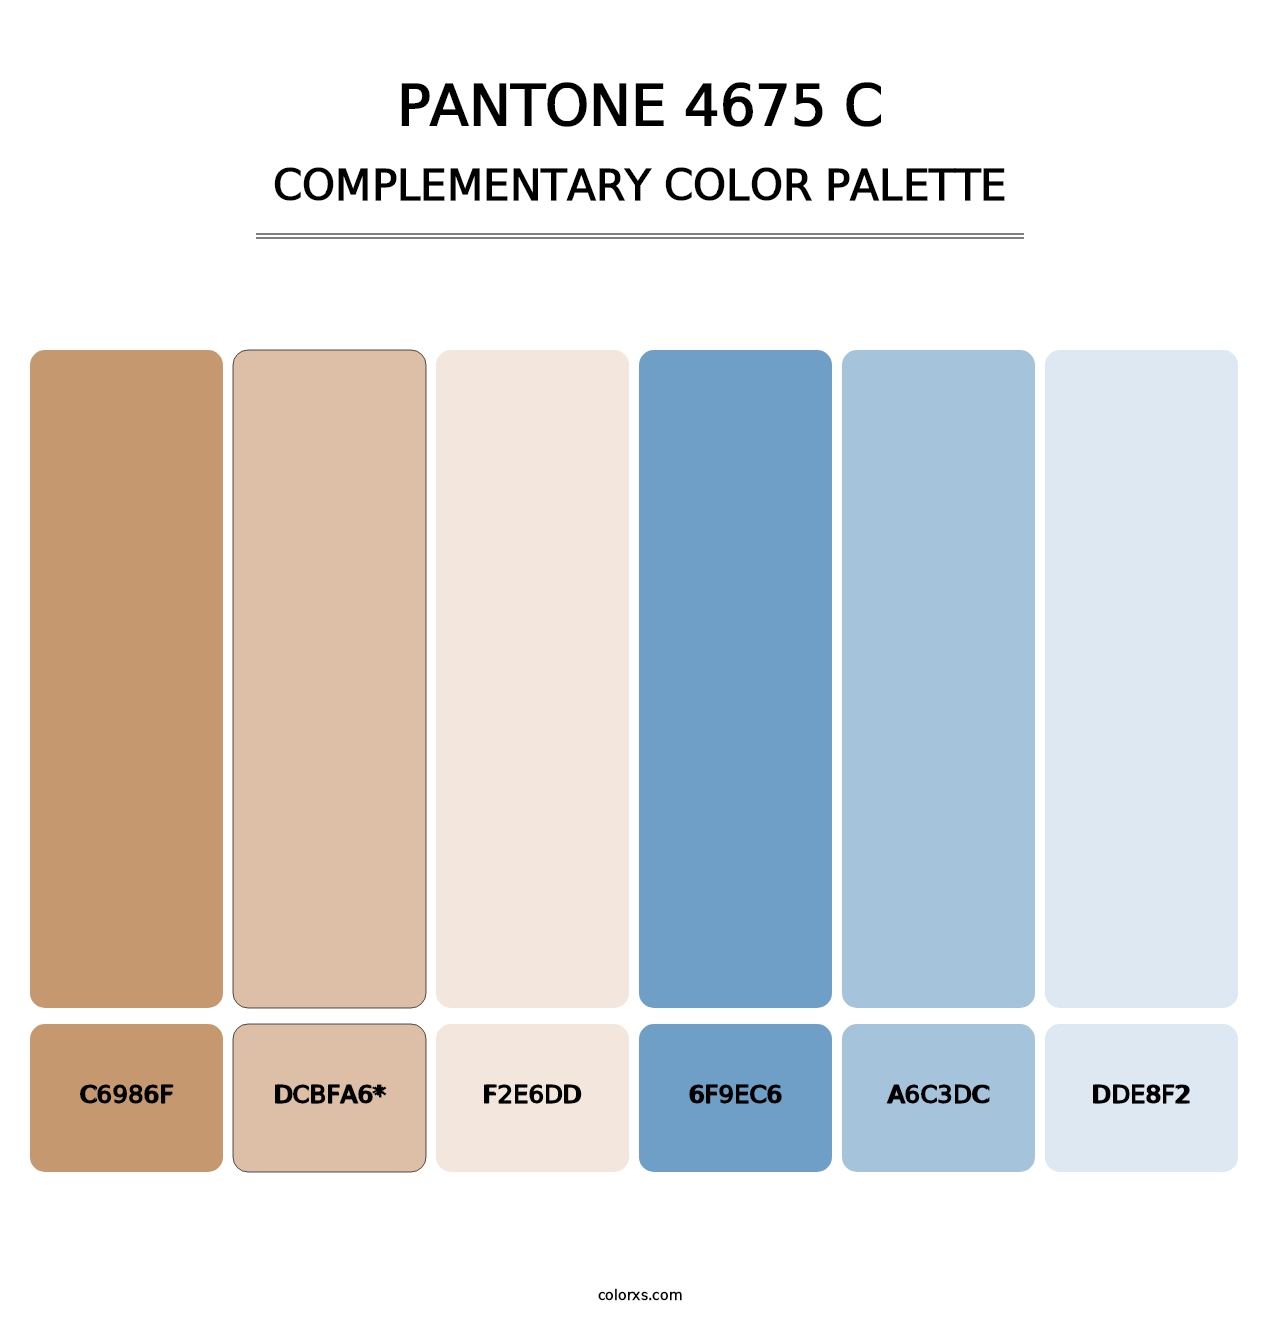 PANTONE 4675 C - Complementary Color Palette